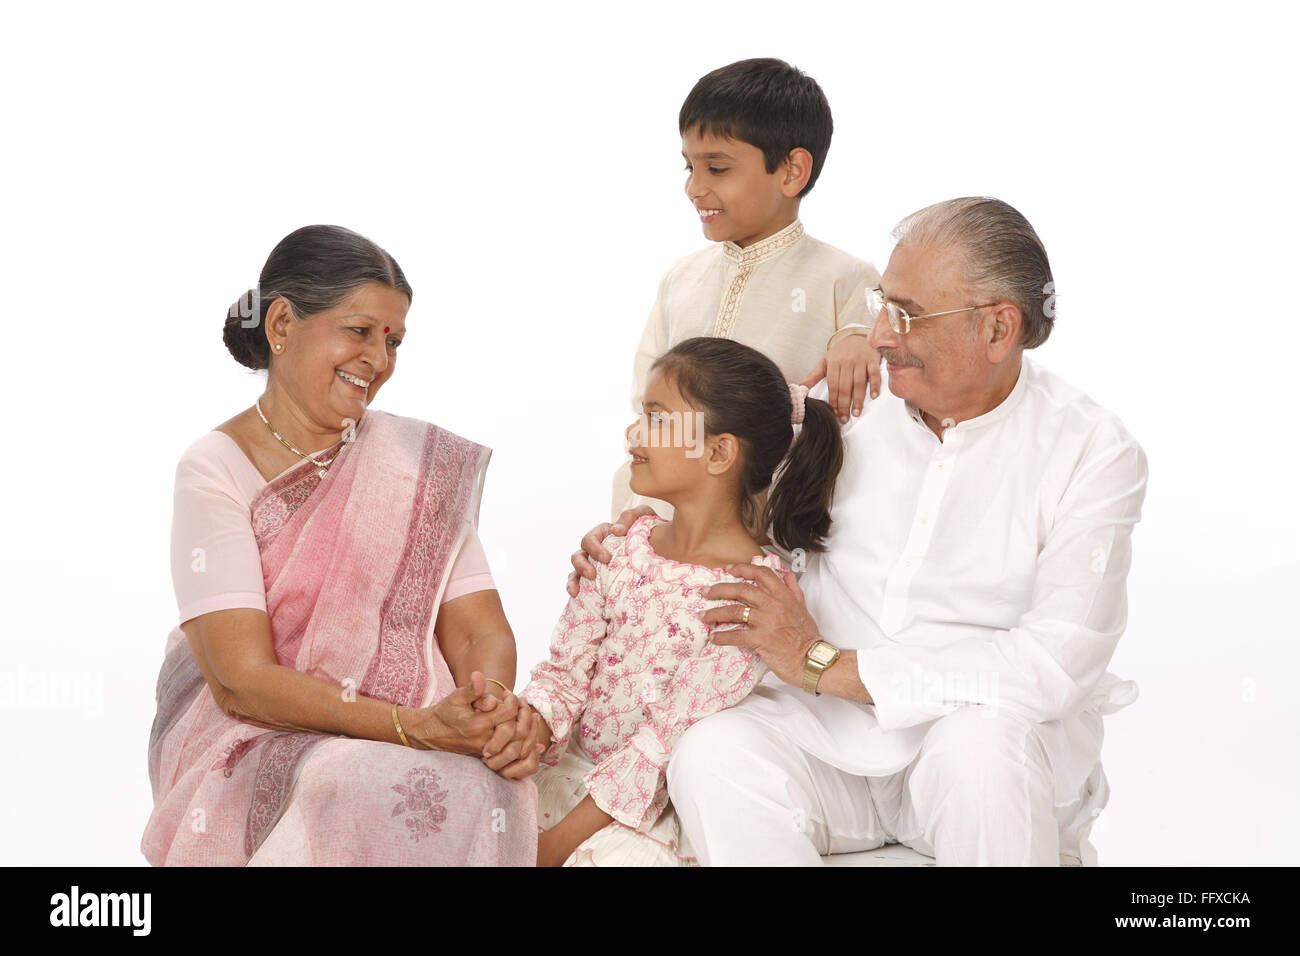 grandparent with grandchildren, MR#703N,703O,703P,703Q Stock Photo